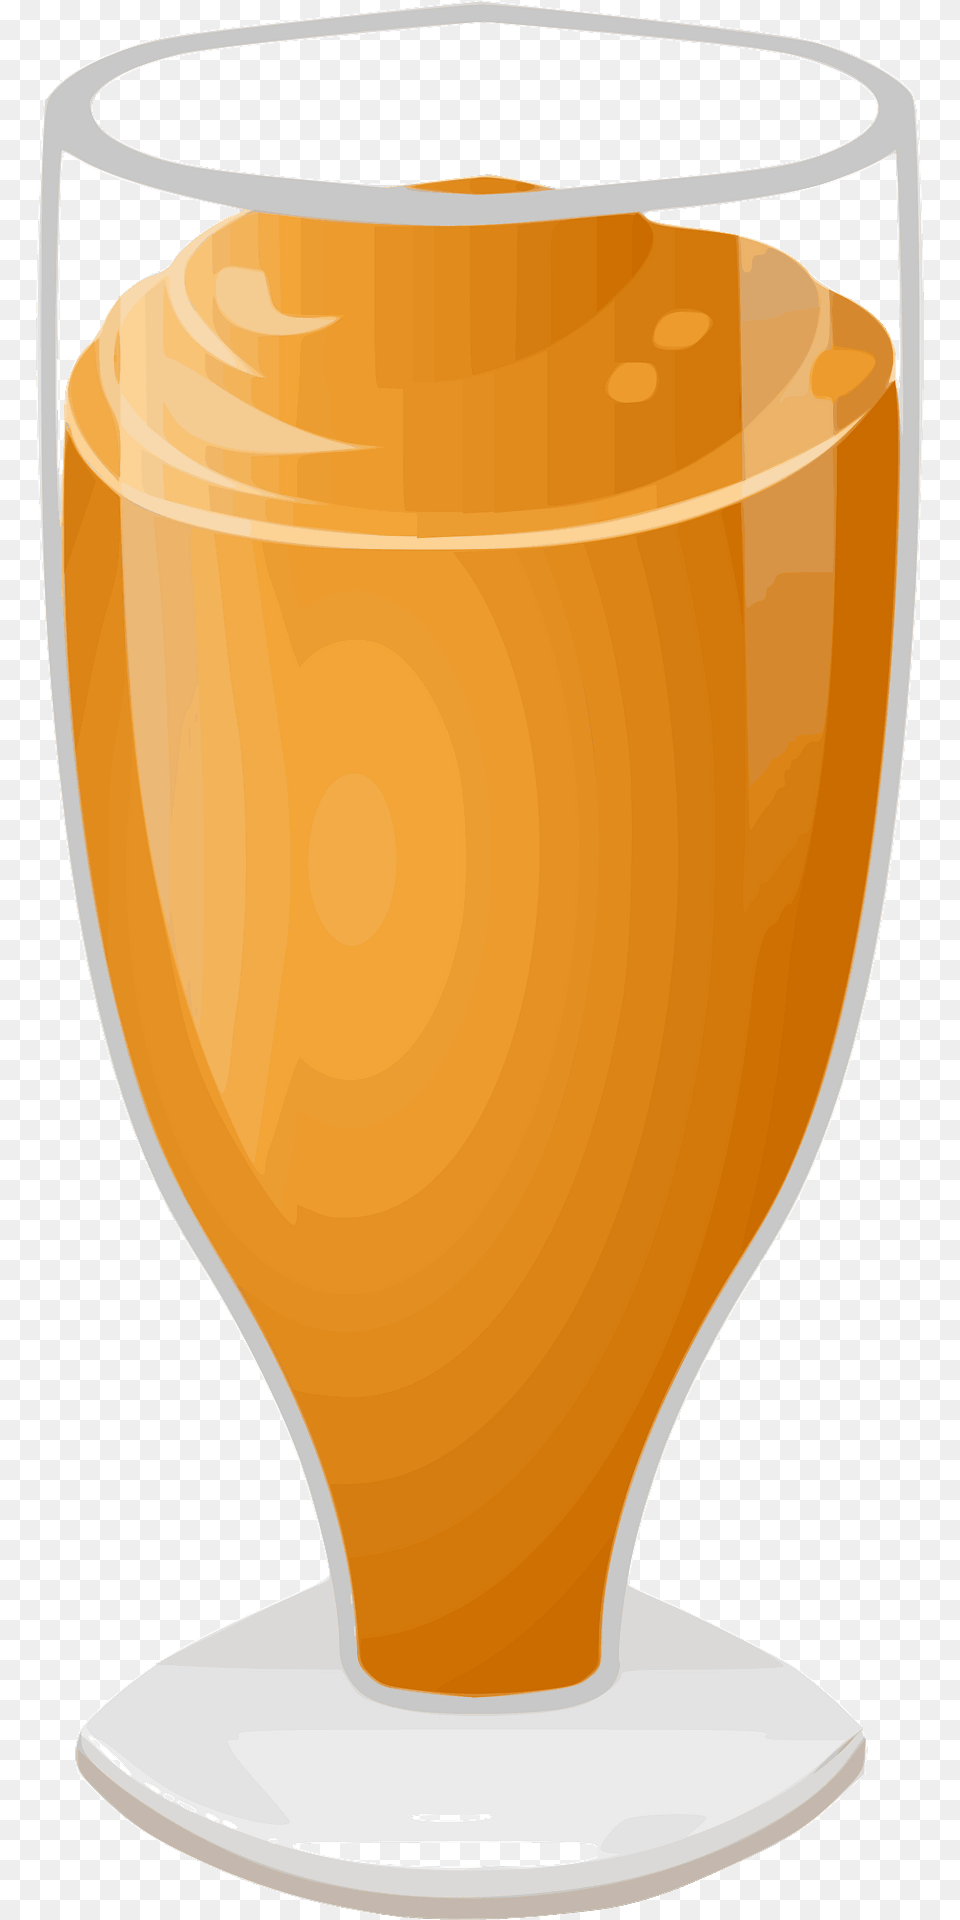 Beer In A Glass Clipart, Beverage, Juice, Orange Juice, Bottle Free Png